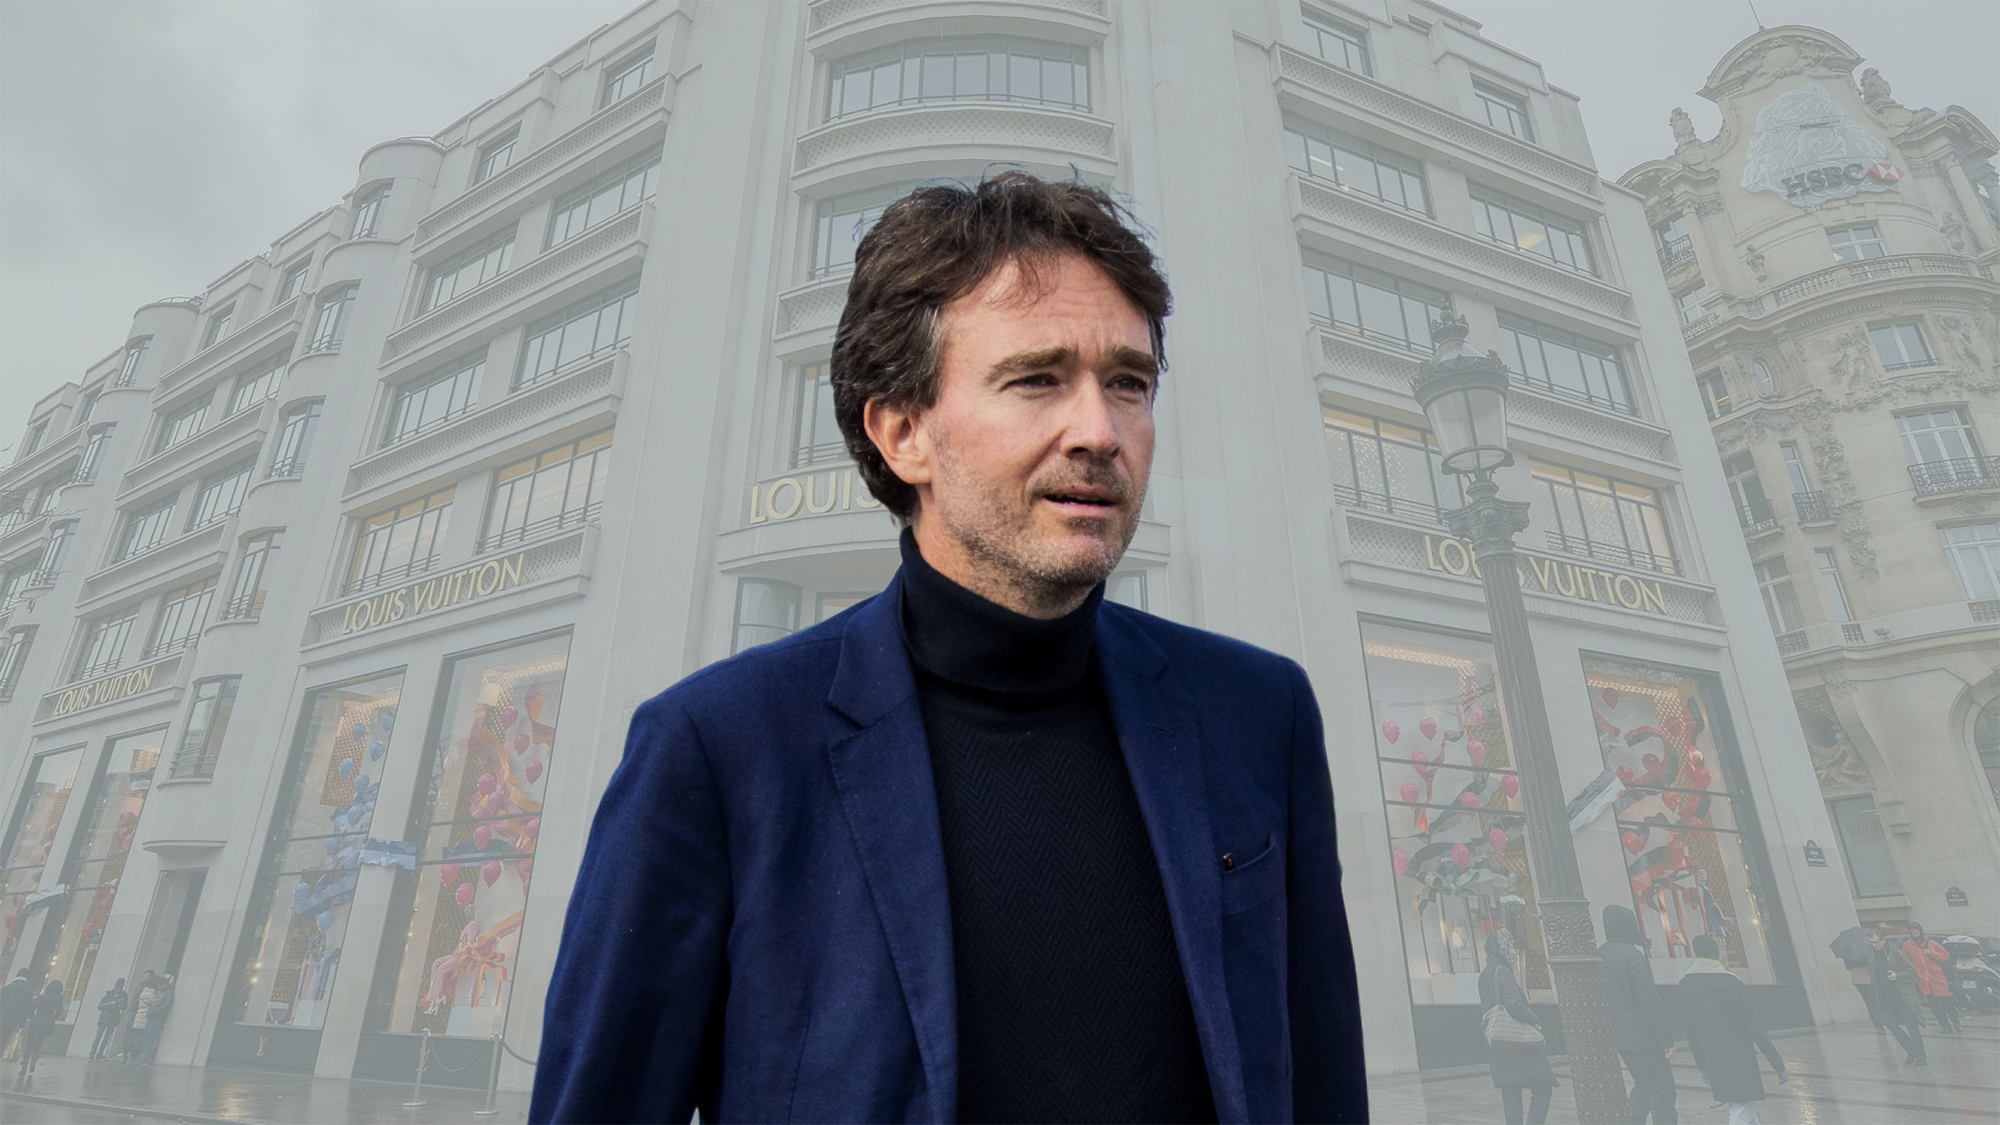 Antoine Arnault, Vice Chairman of Christian Dior and son of the founder of LVMH, Bernard Arnault